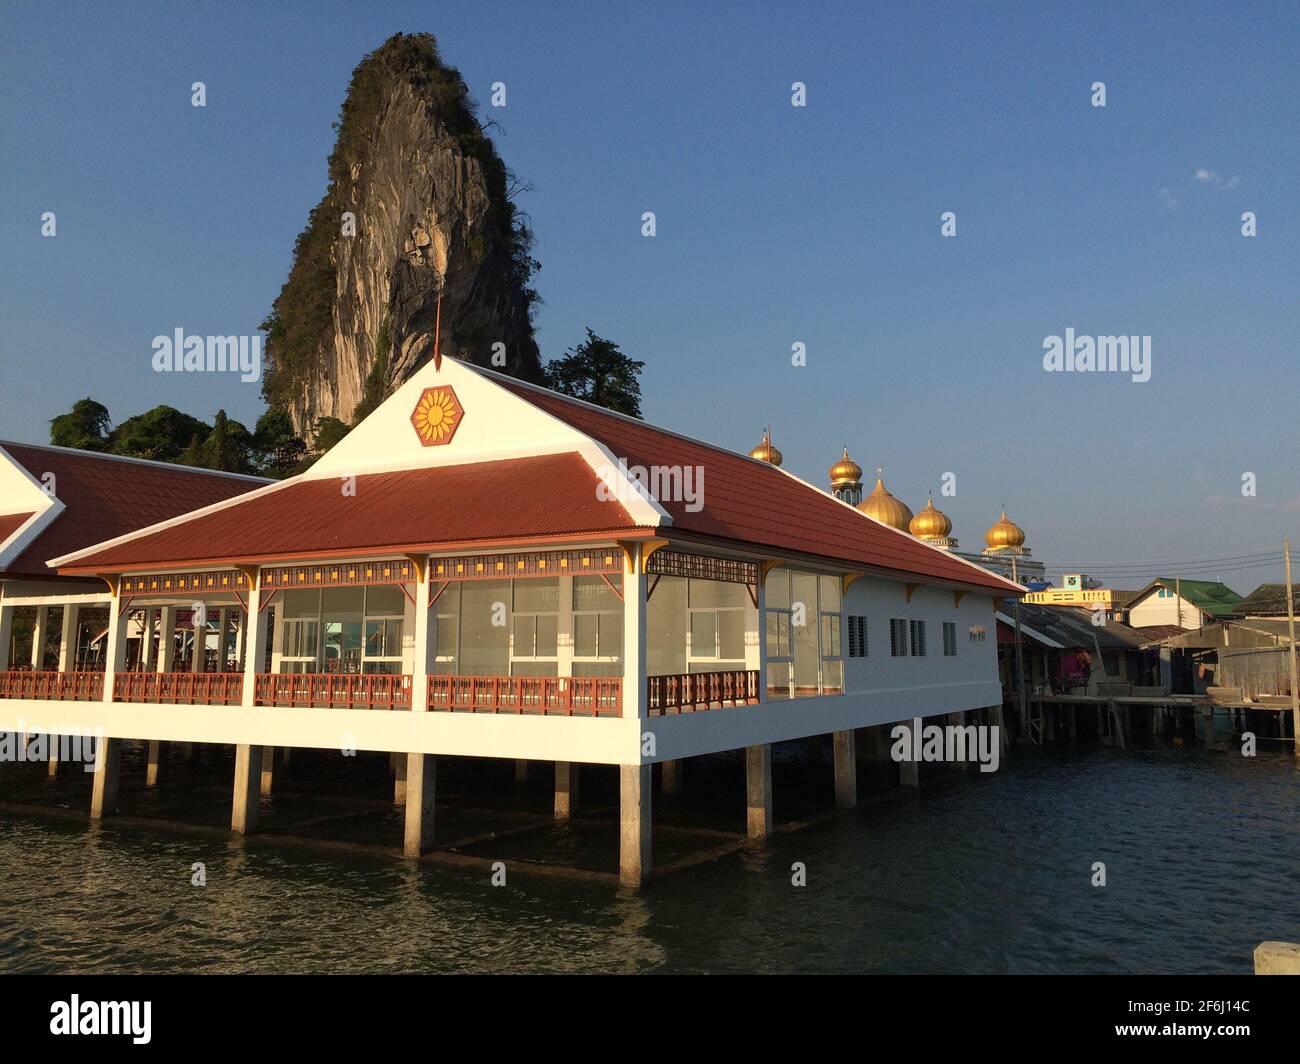 Koh Panyi, Phang Nga, Thailand - März 15 2016: Long-Tail Touristenboote parken am Ufer des schwimmenden Dorfes Koh Panyi Stockfoto